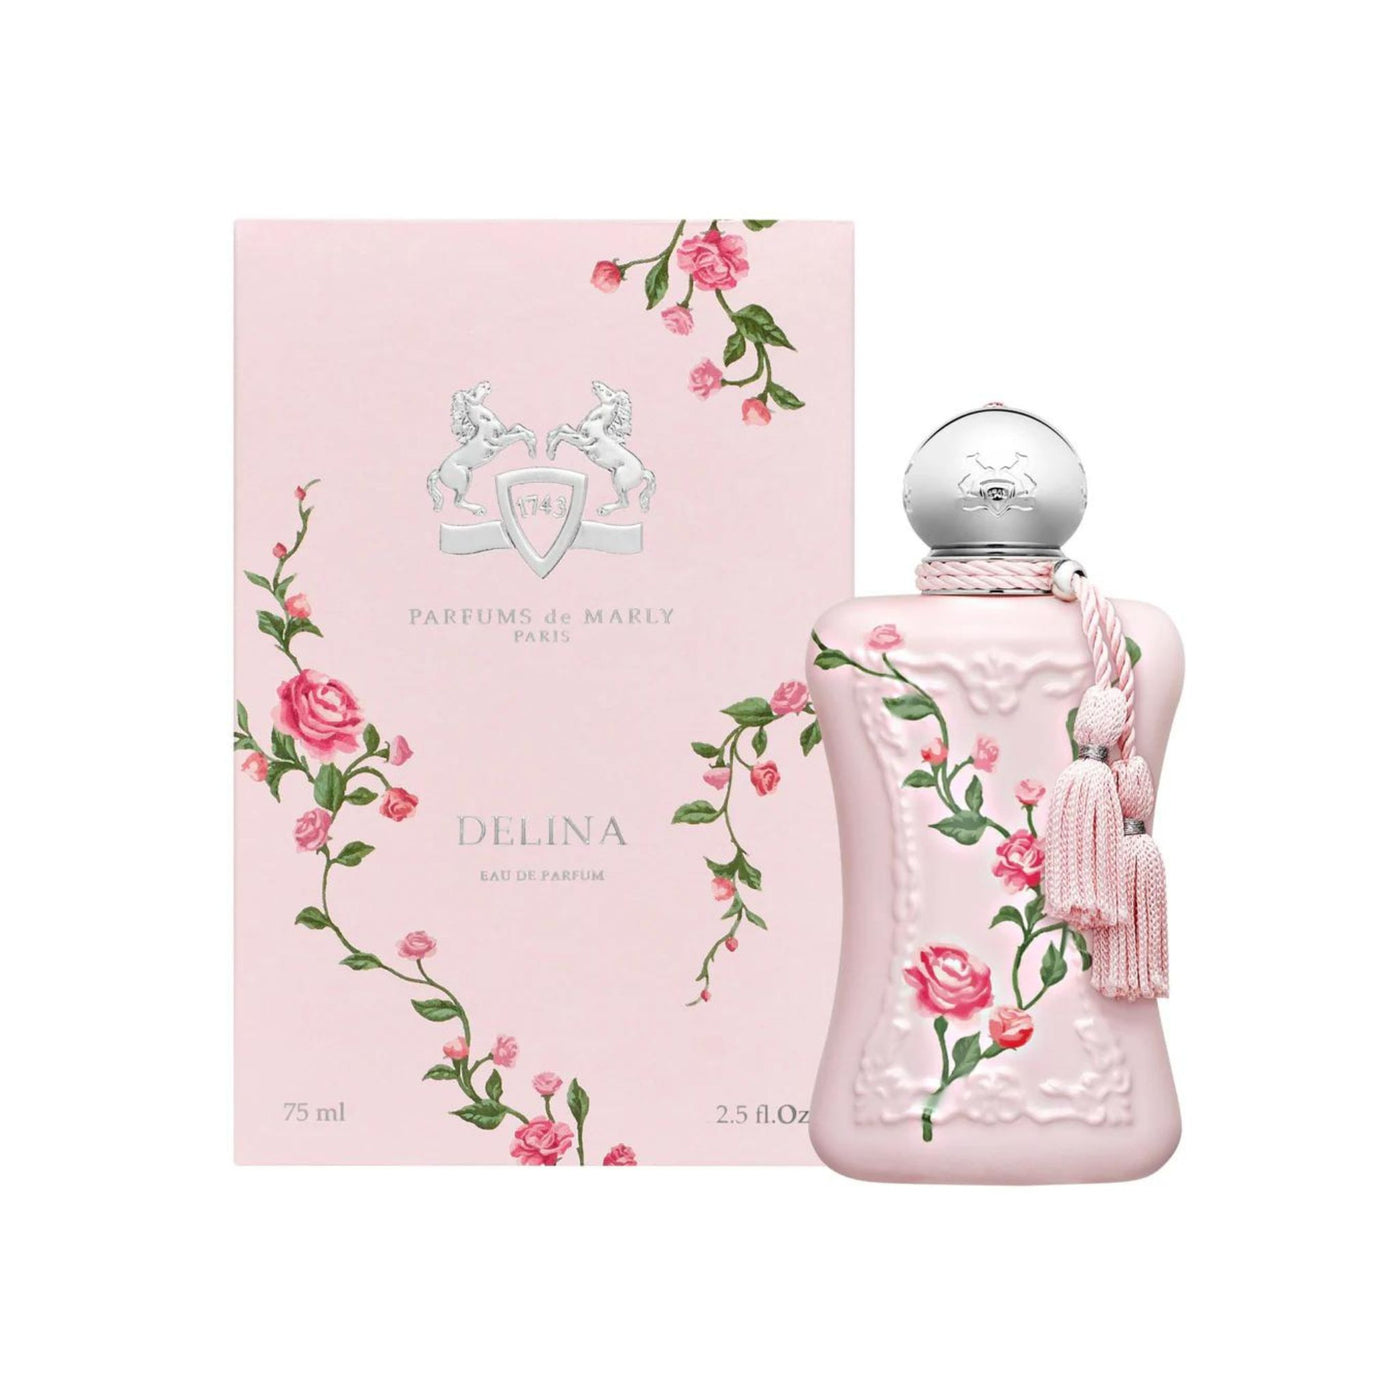 Delina Limited Edition Parfums de Marly